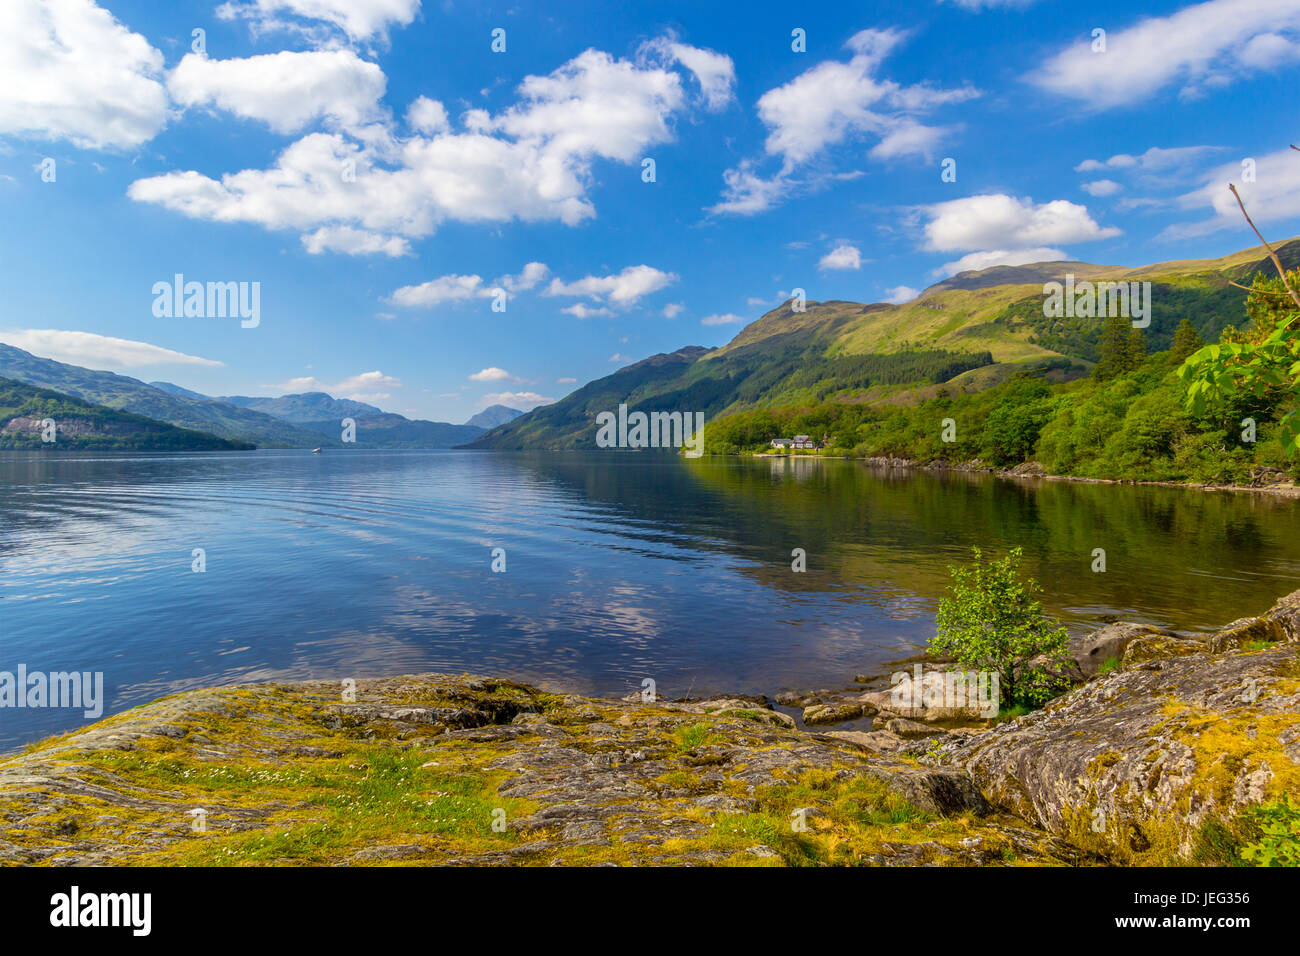 Loch Lomond at rowardennan, Summer in Scotland, UK Stock Photo